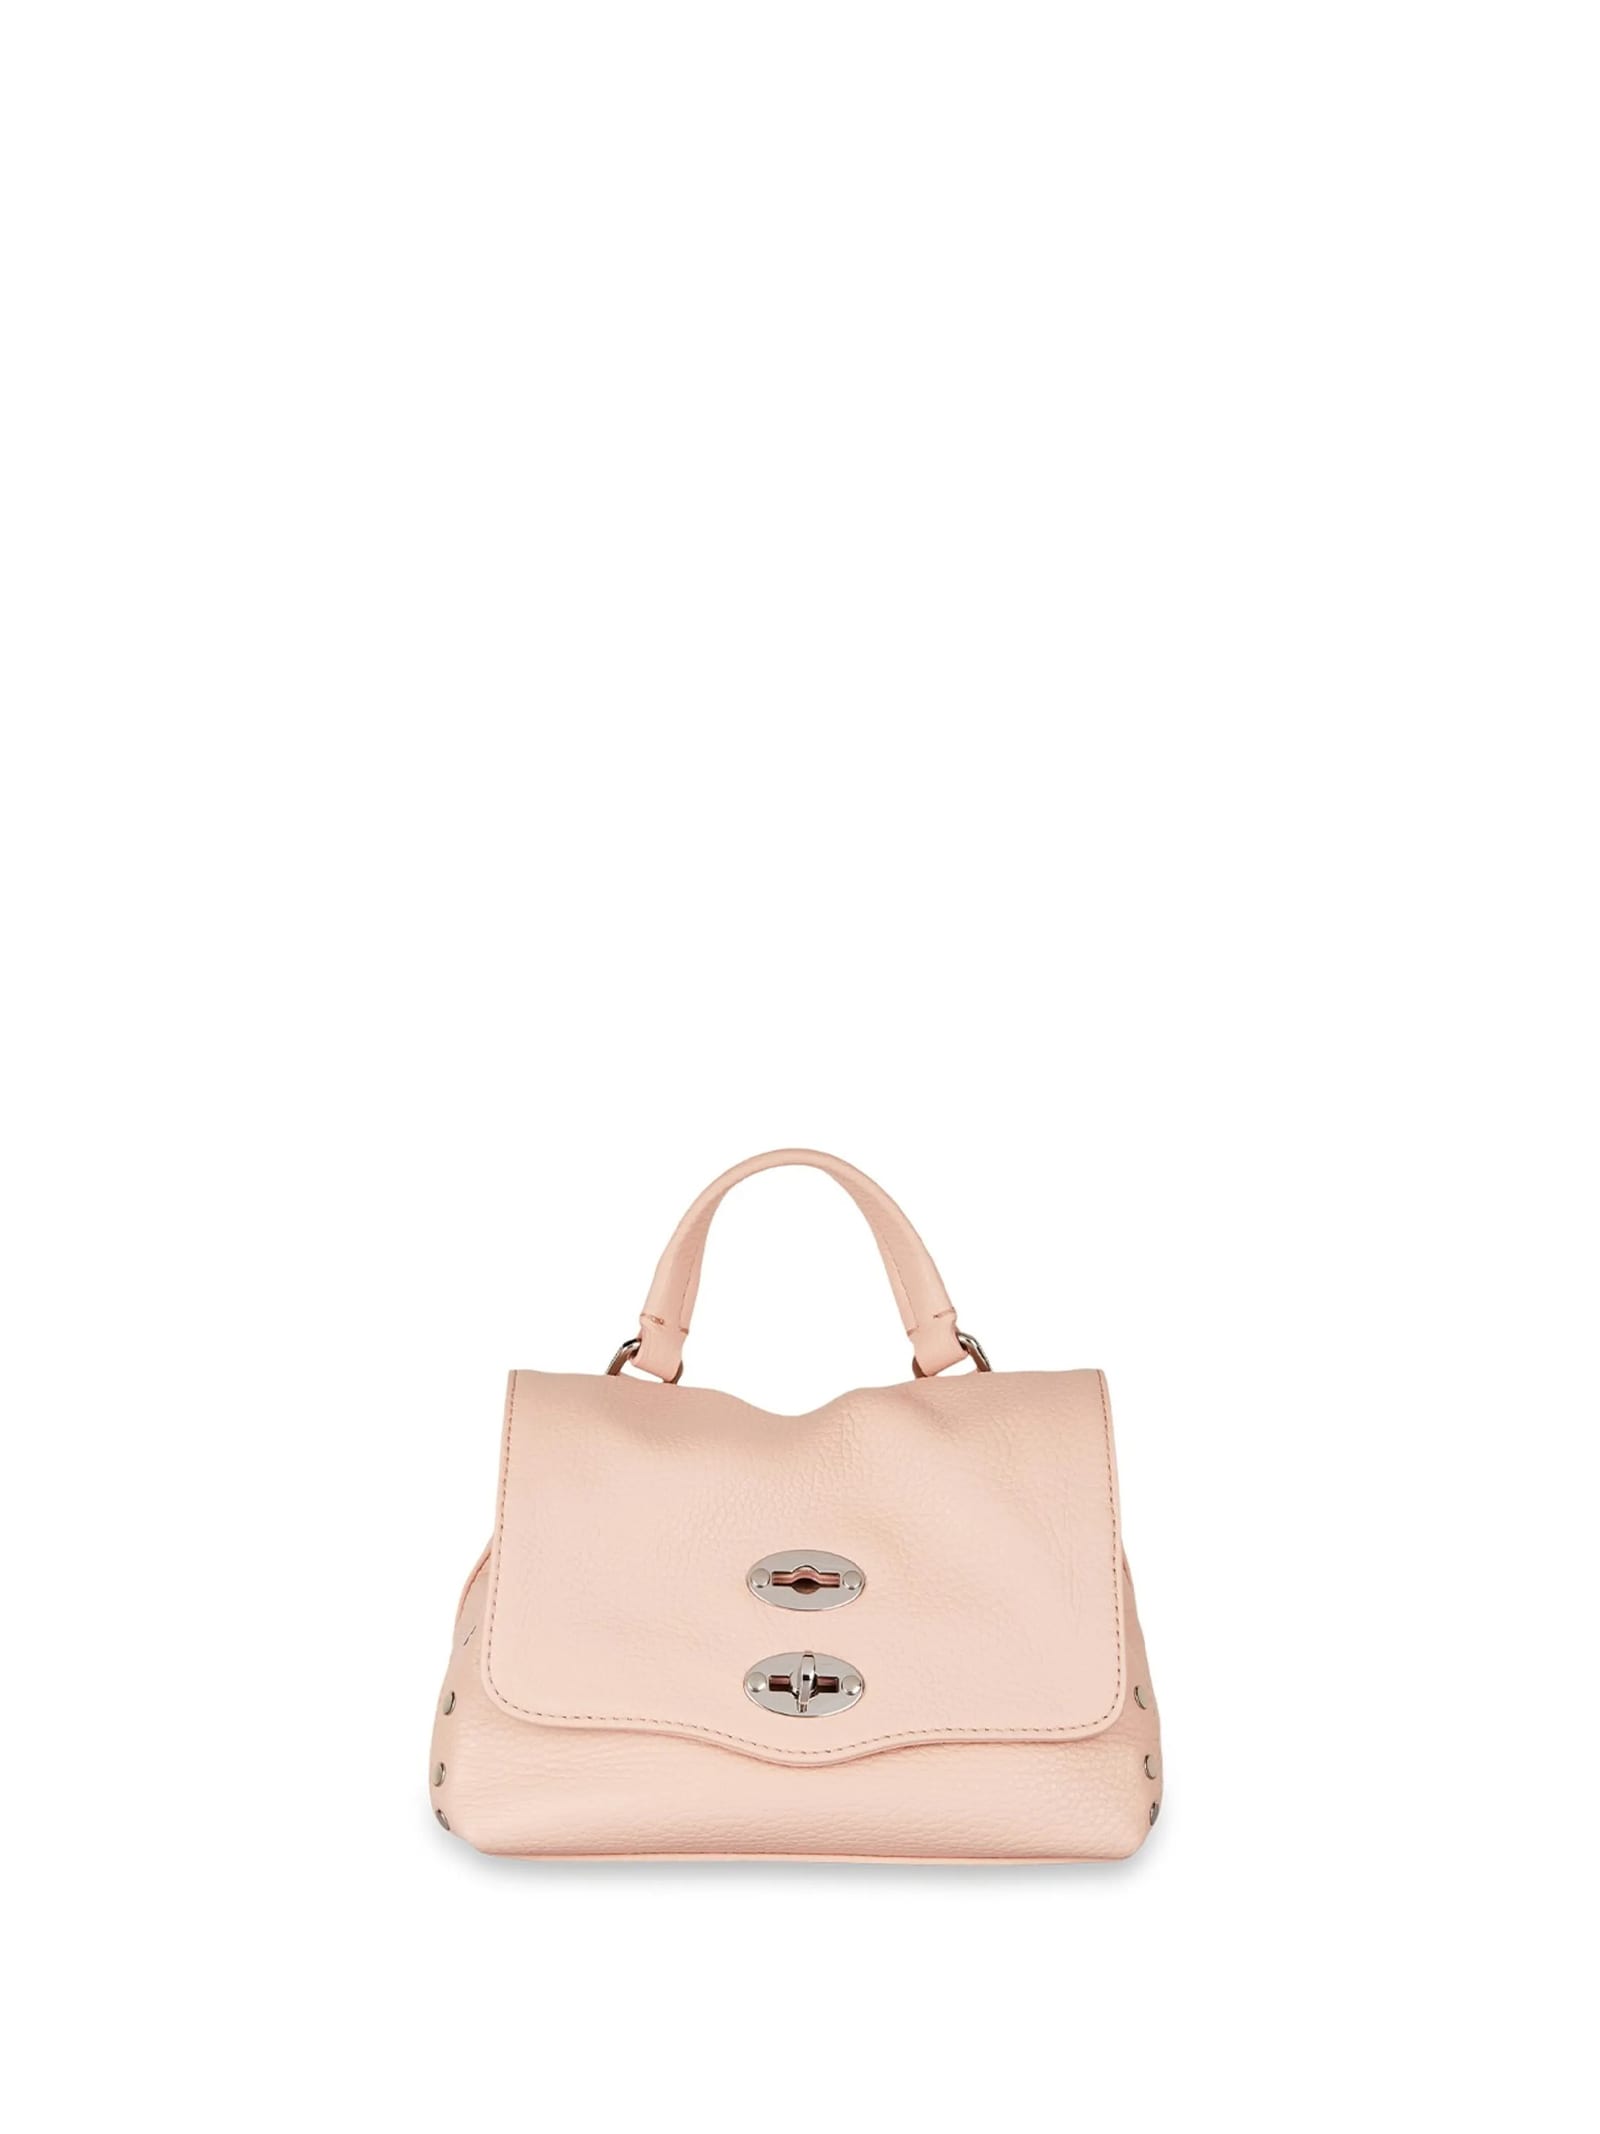 Postina Daily Pink Leather Bag With Shoulder Strap